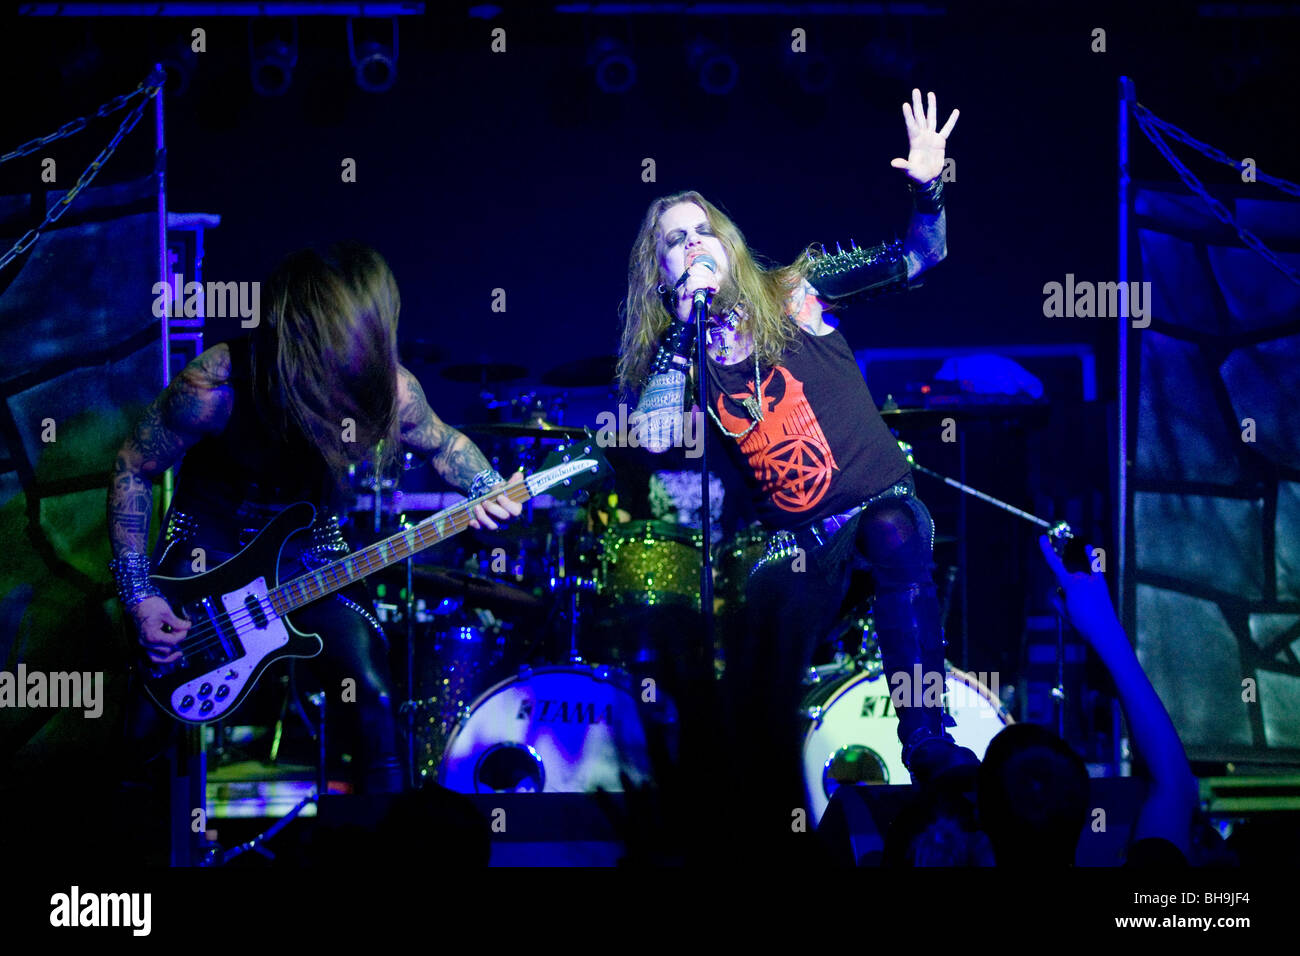 BUDAPEST - 18 gennaio: Svezia band death metal chiamato Necrophobic esegue sul palco al Club Diesel Foto Stock